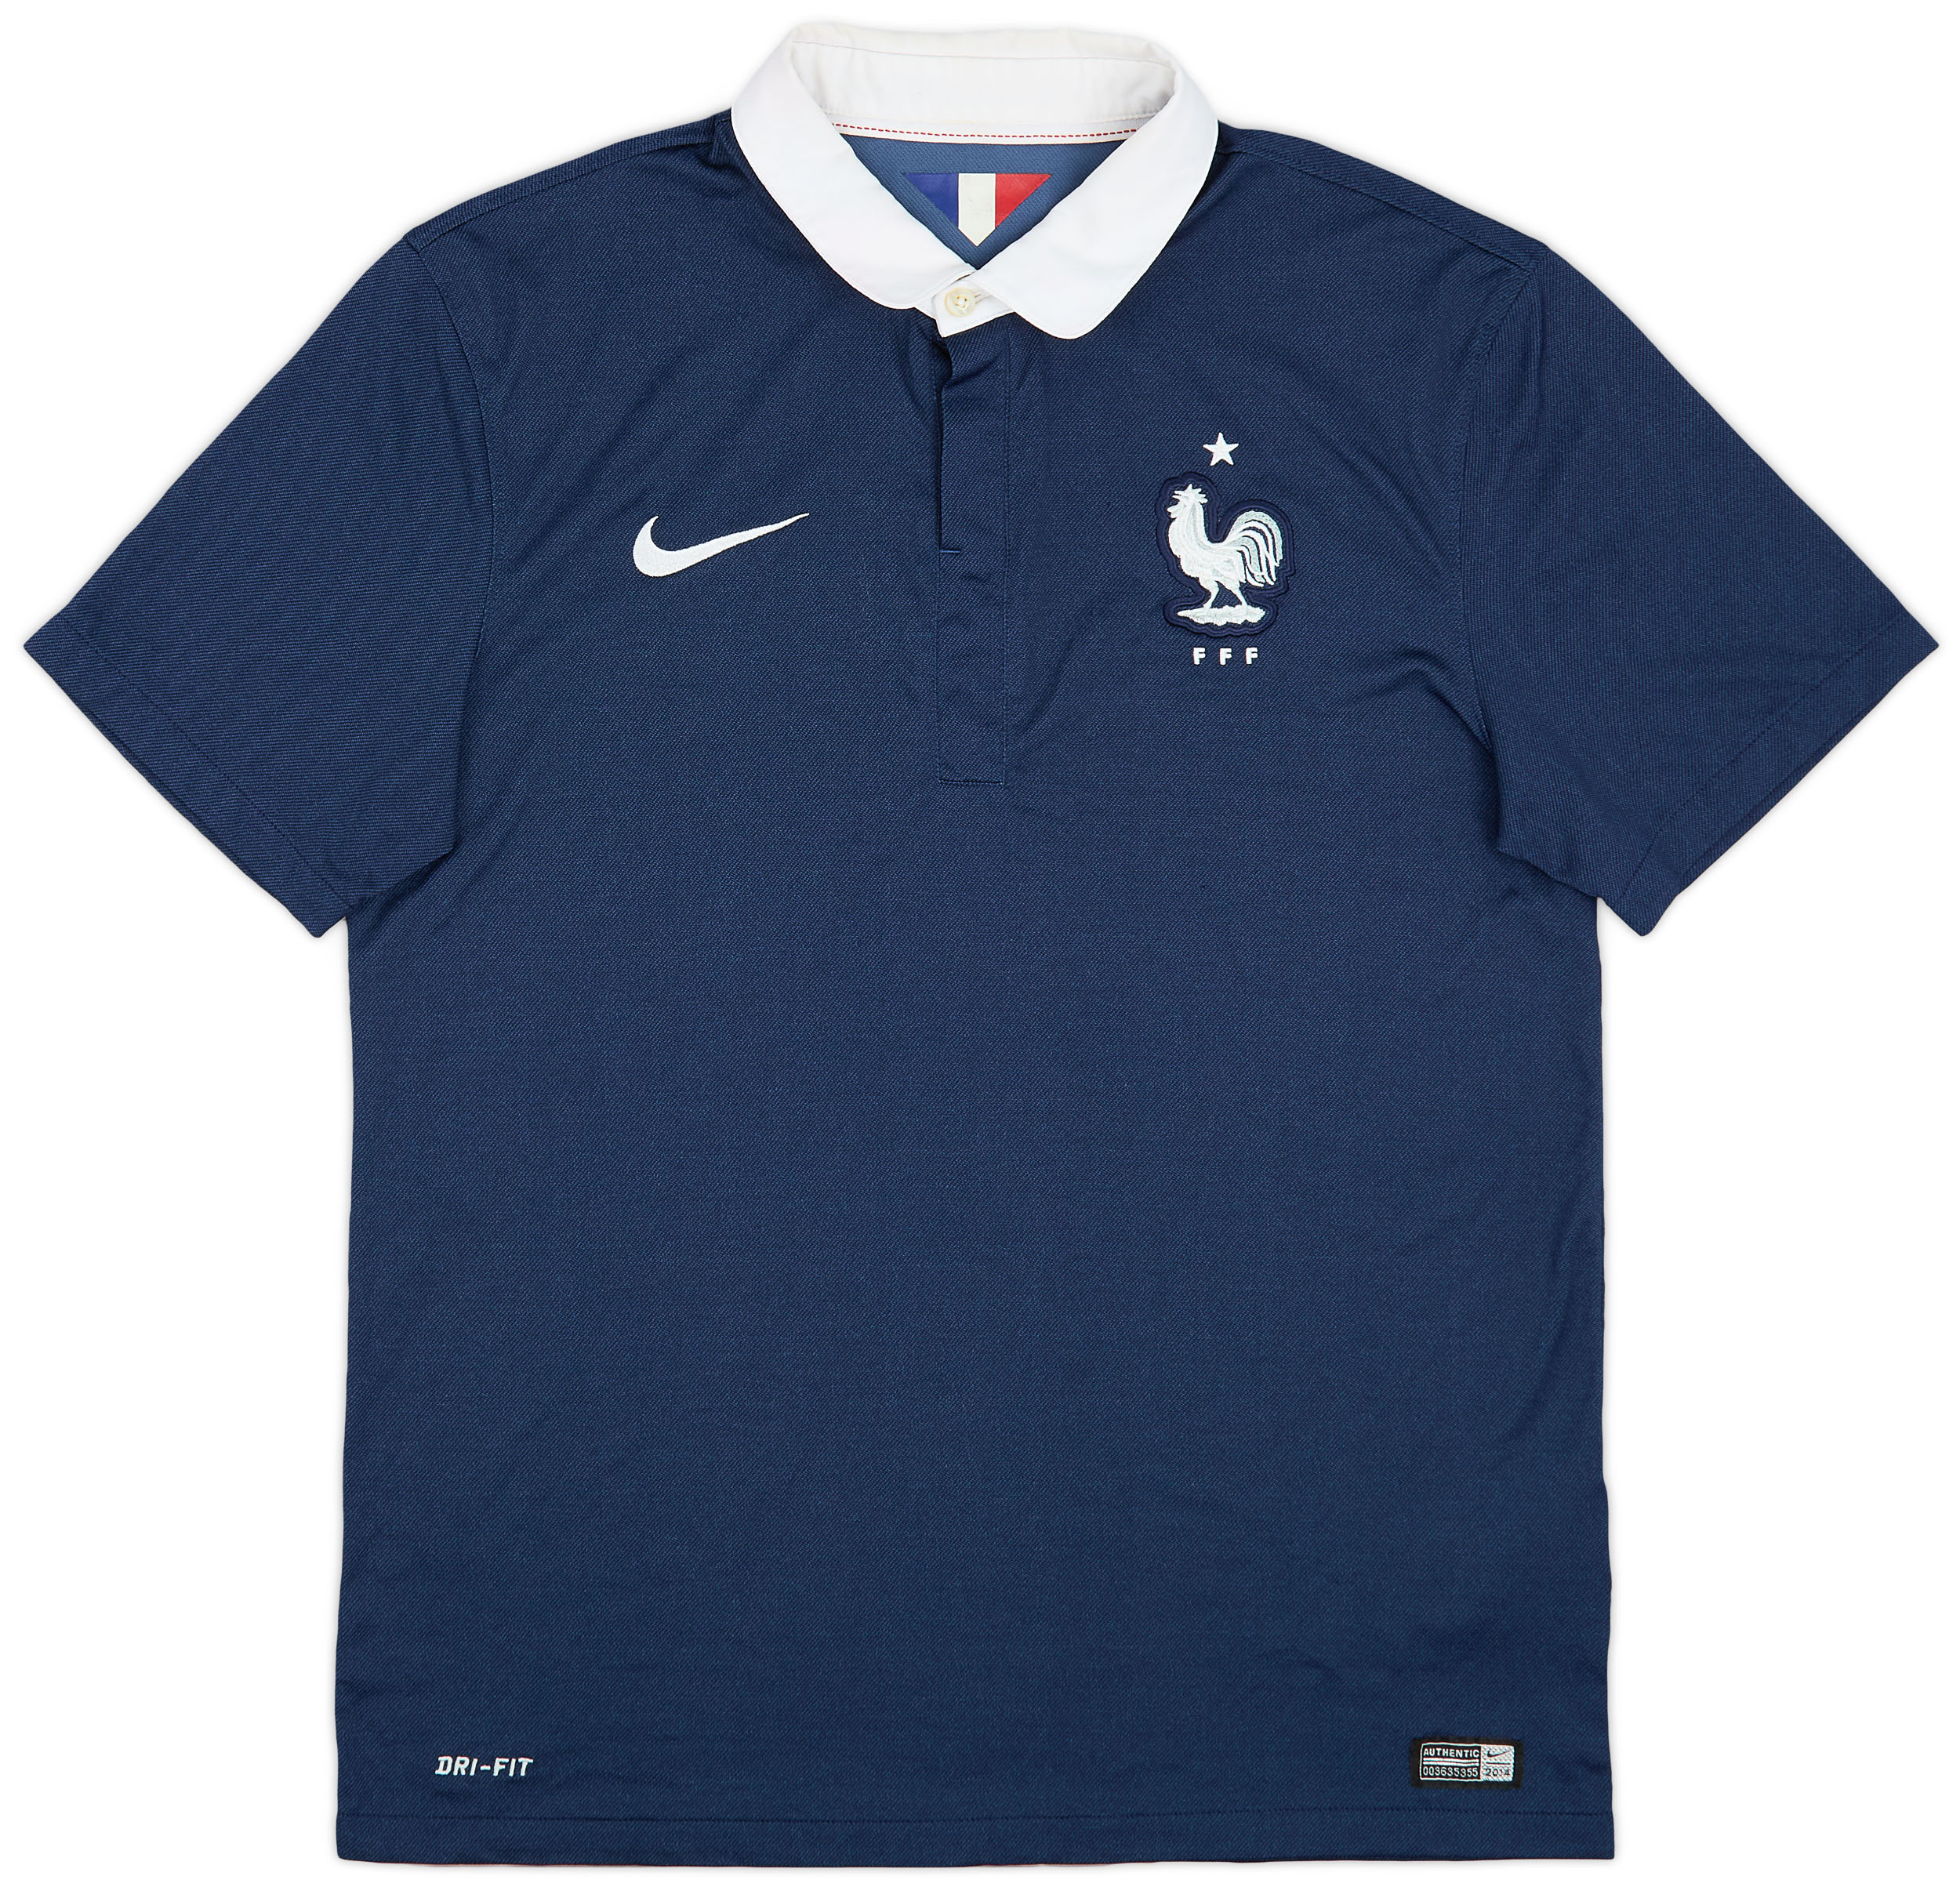 2014-15 France Home Shirt - 7/10 - ()